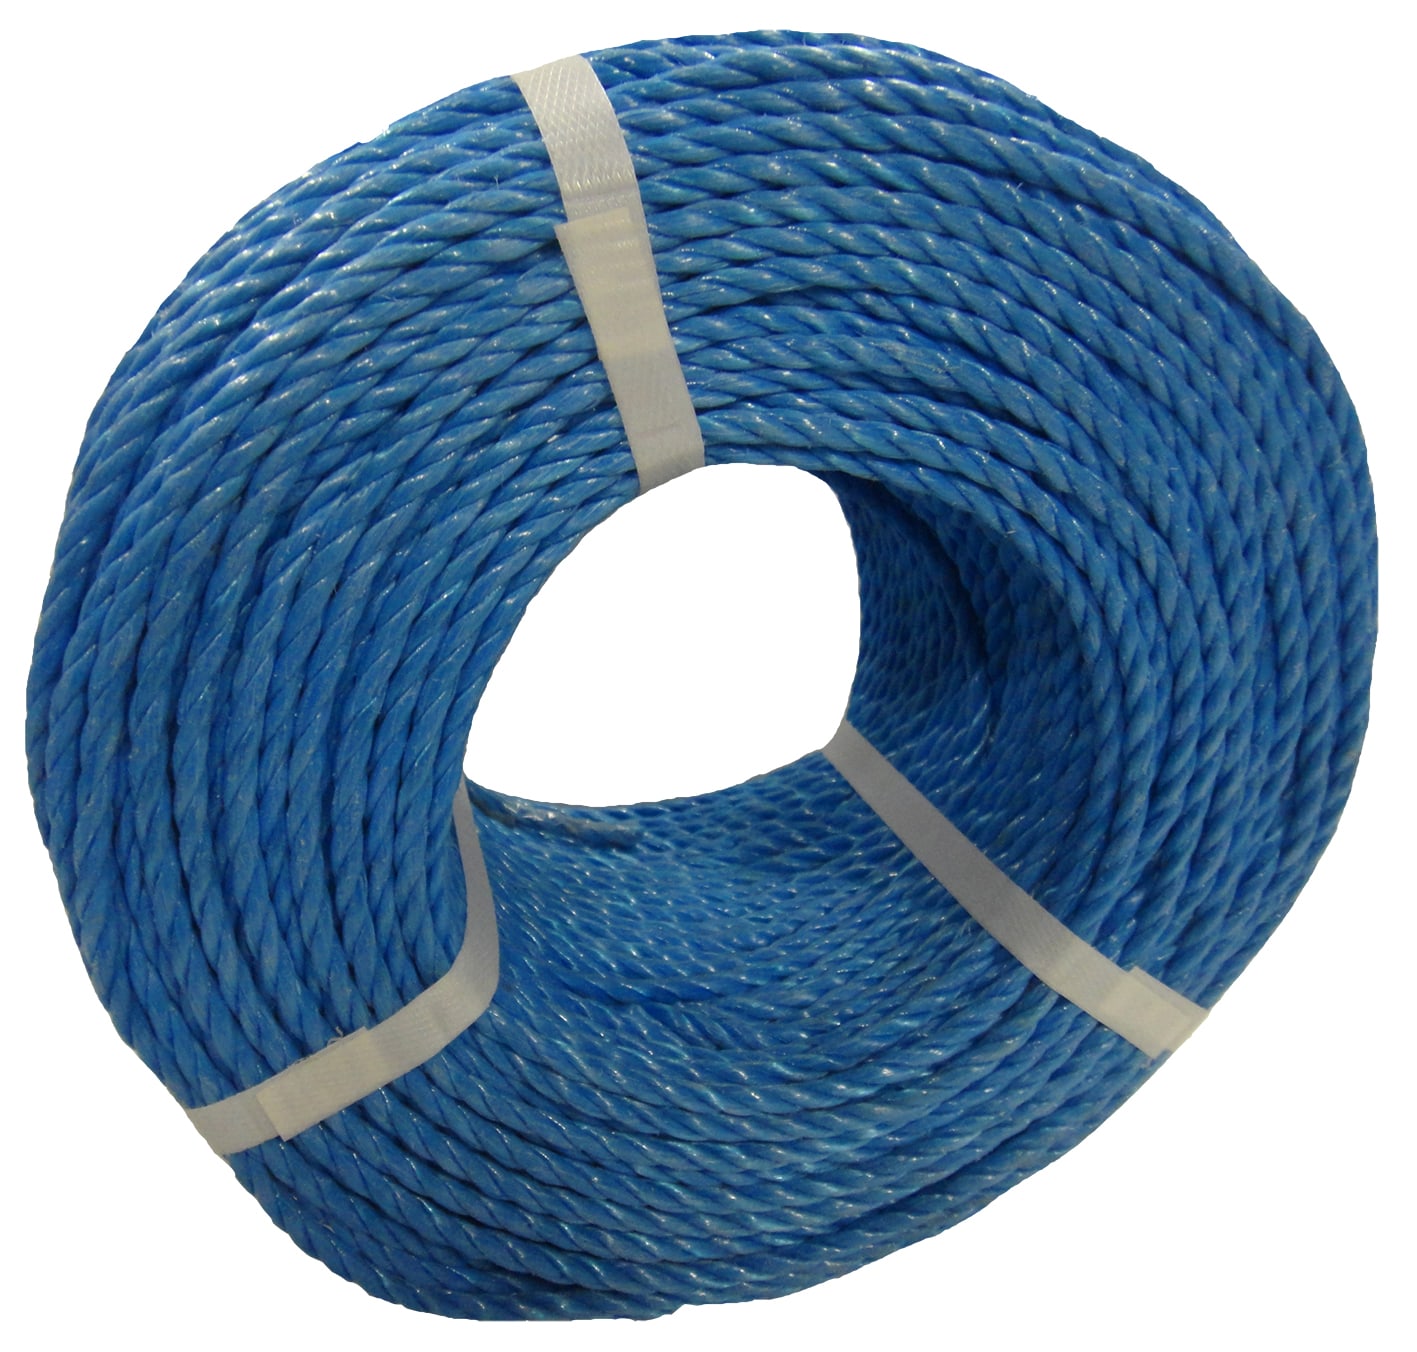 6mm Blue Polypropylene Rope x 30m Coil